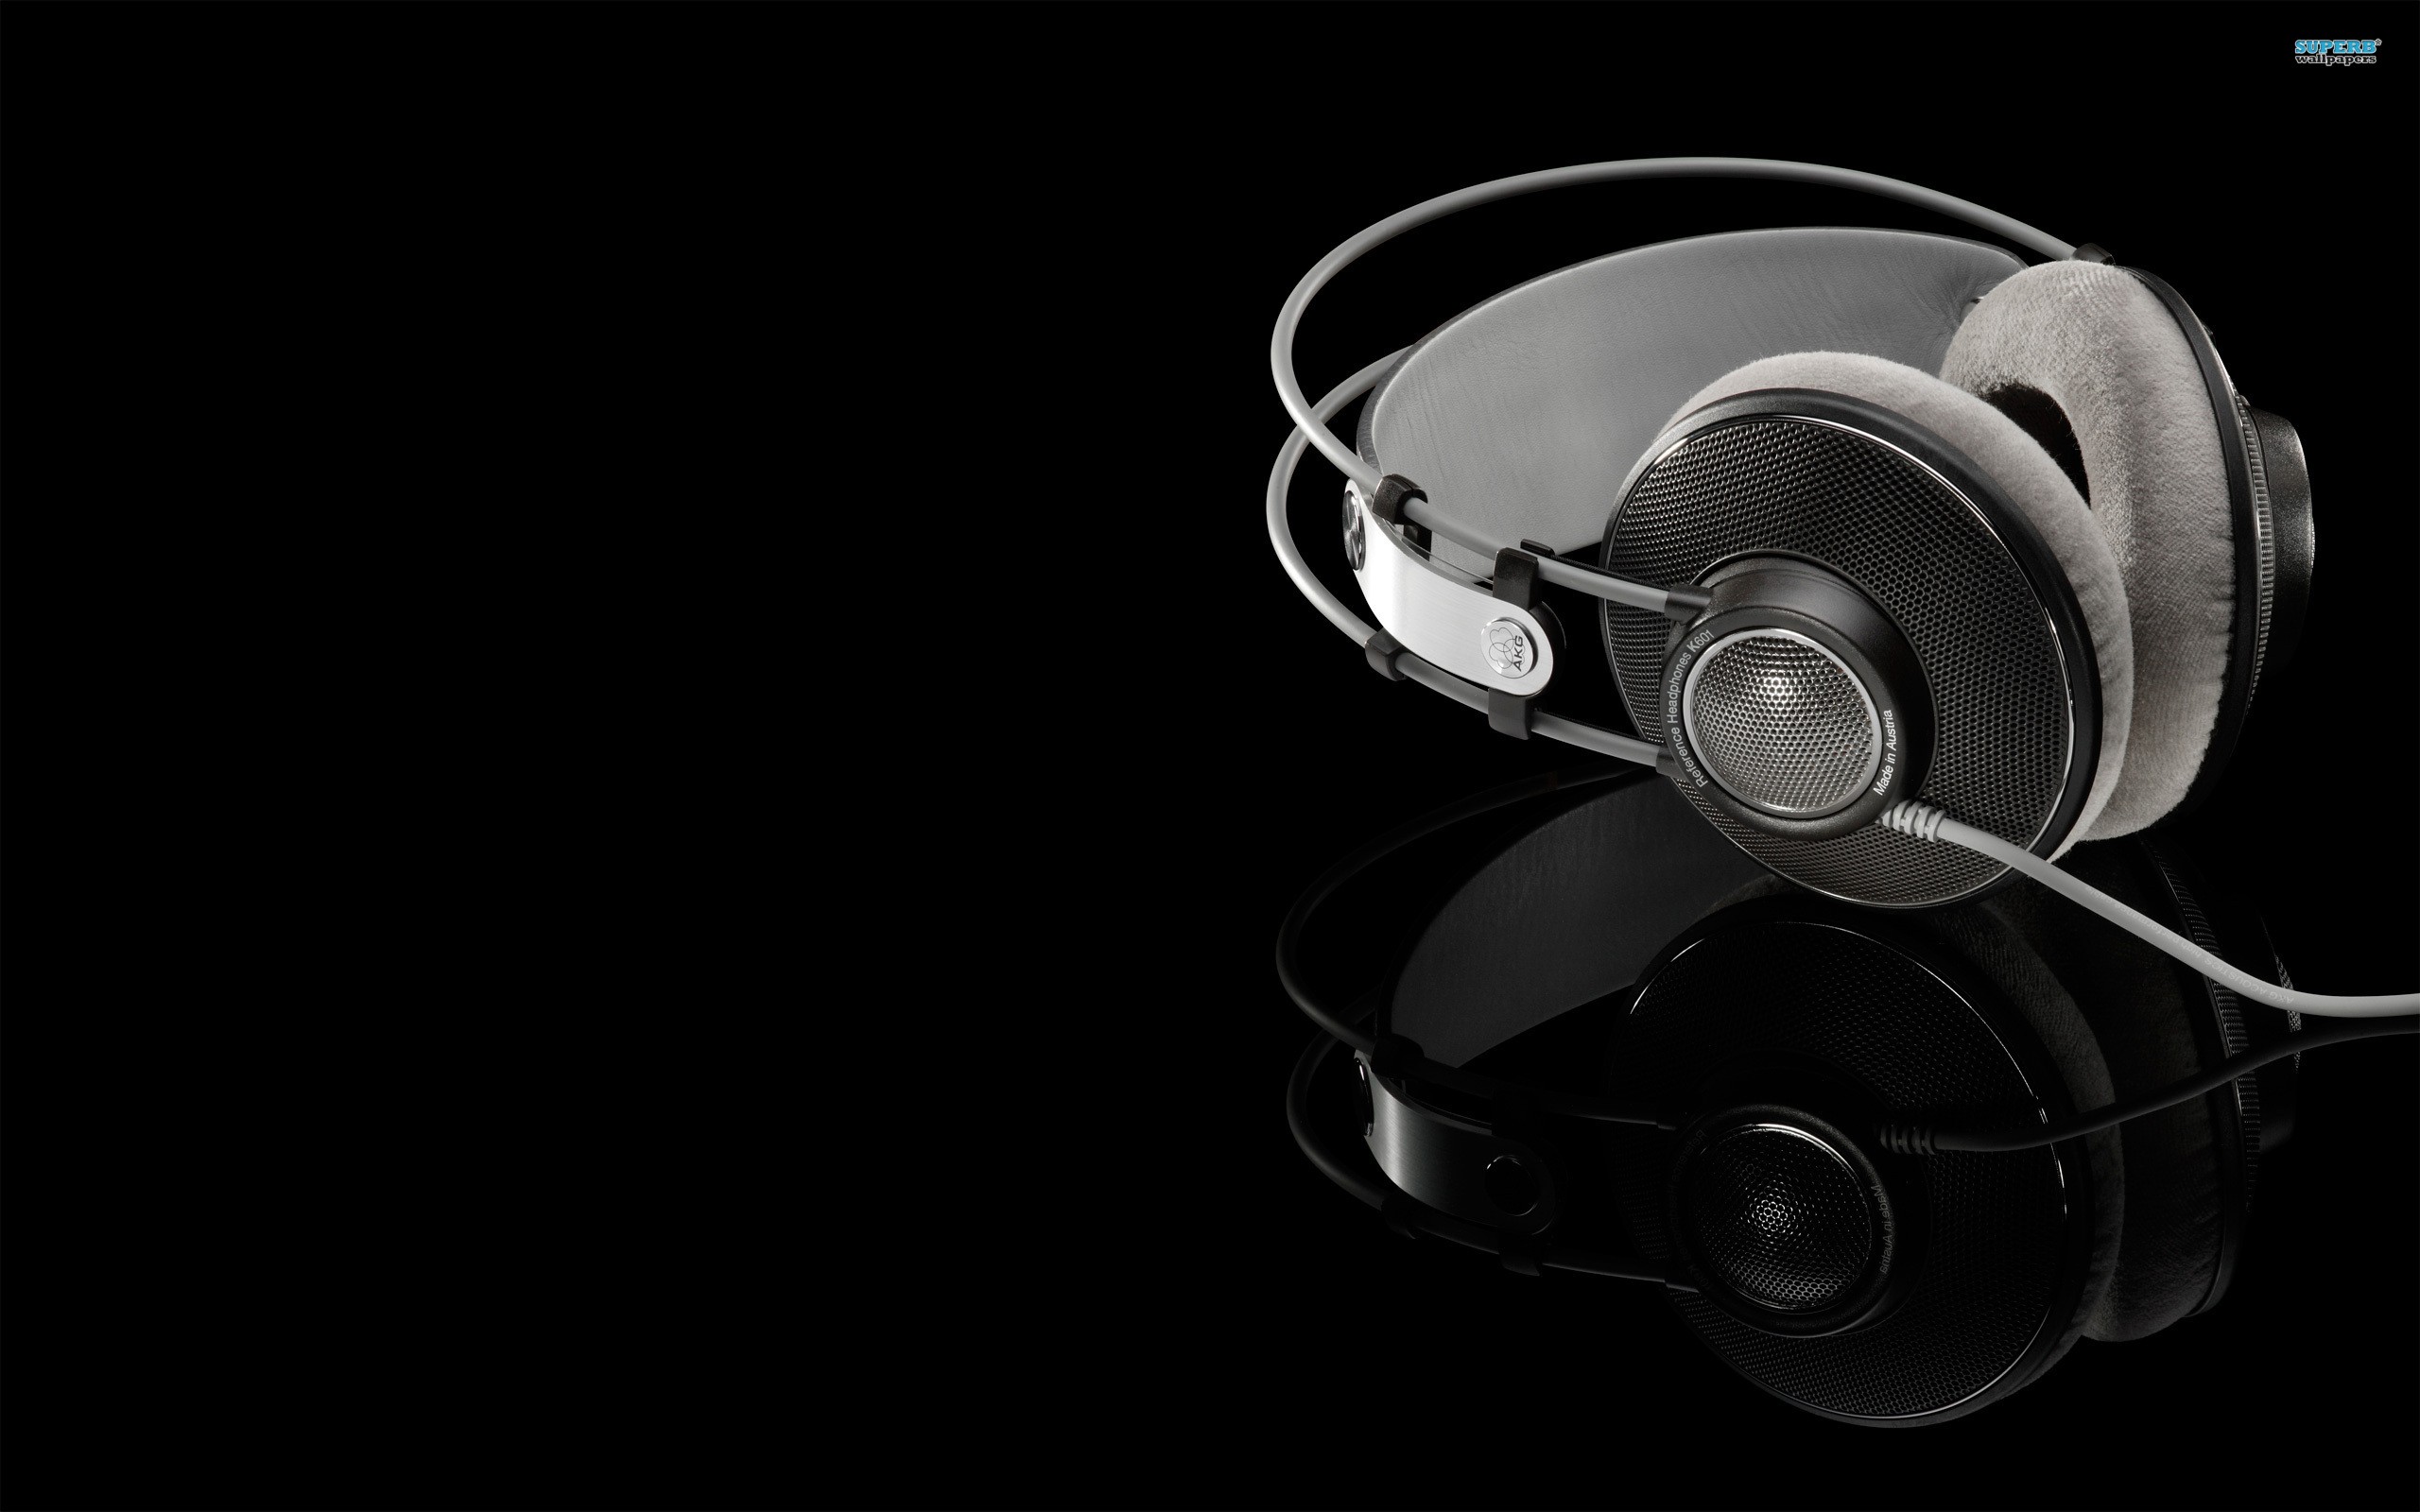 General 2560x1600 AKG headphones simple background black background